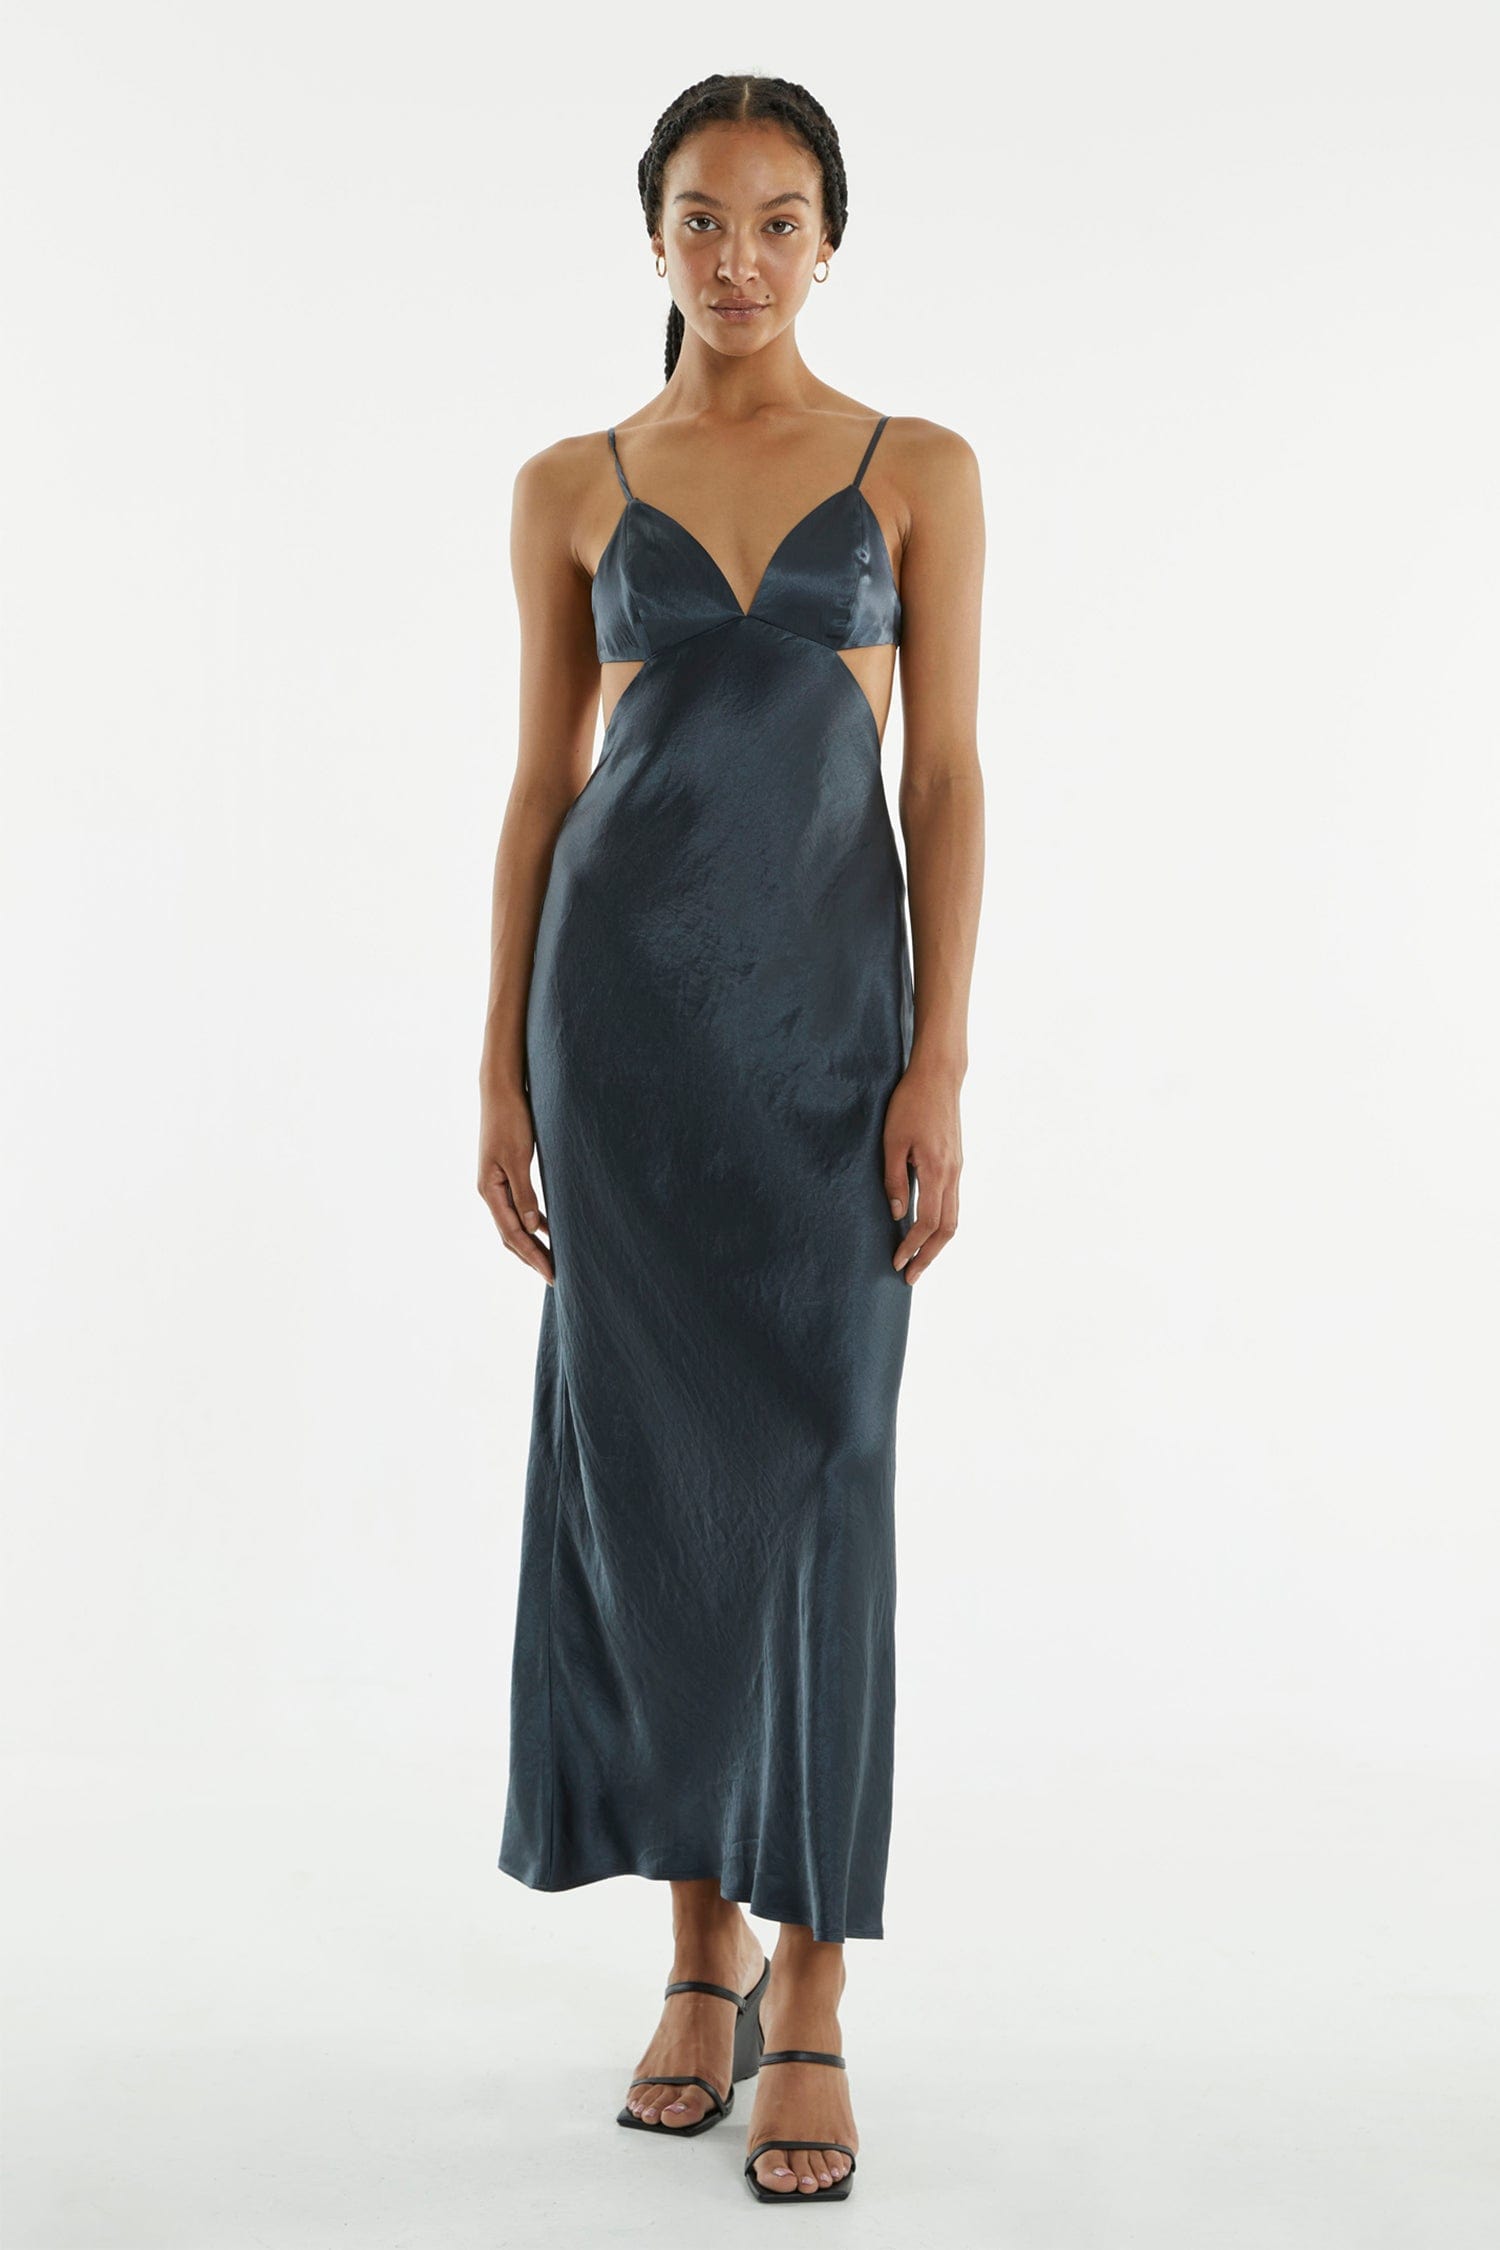 DRESSES | Third Form | Dresses for Women | Australian Designer — Page 2 ...